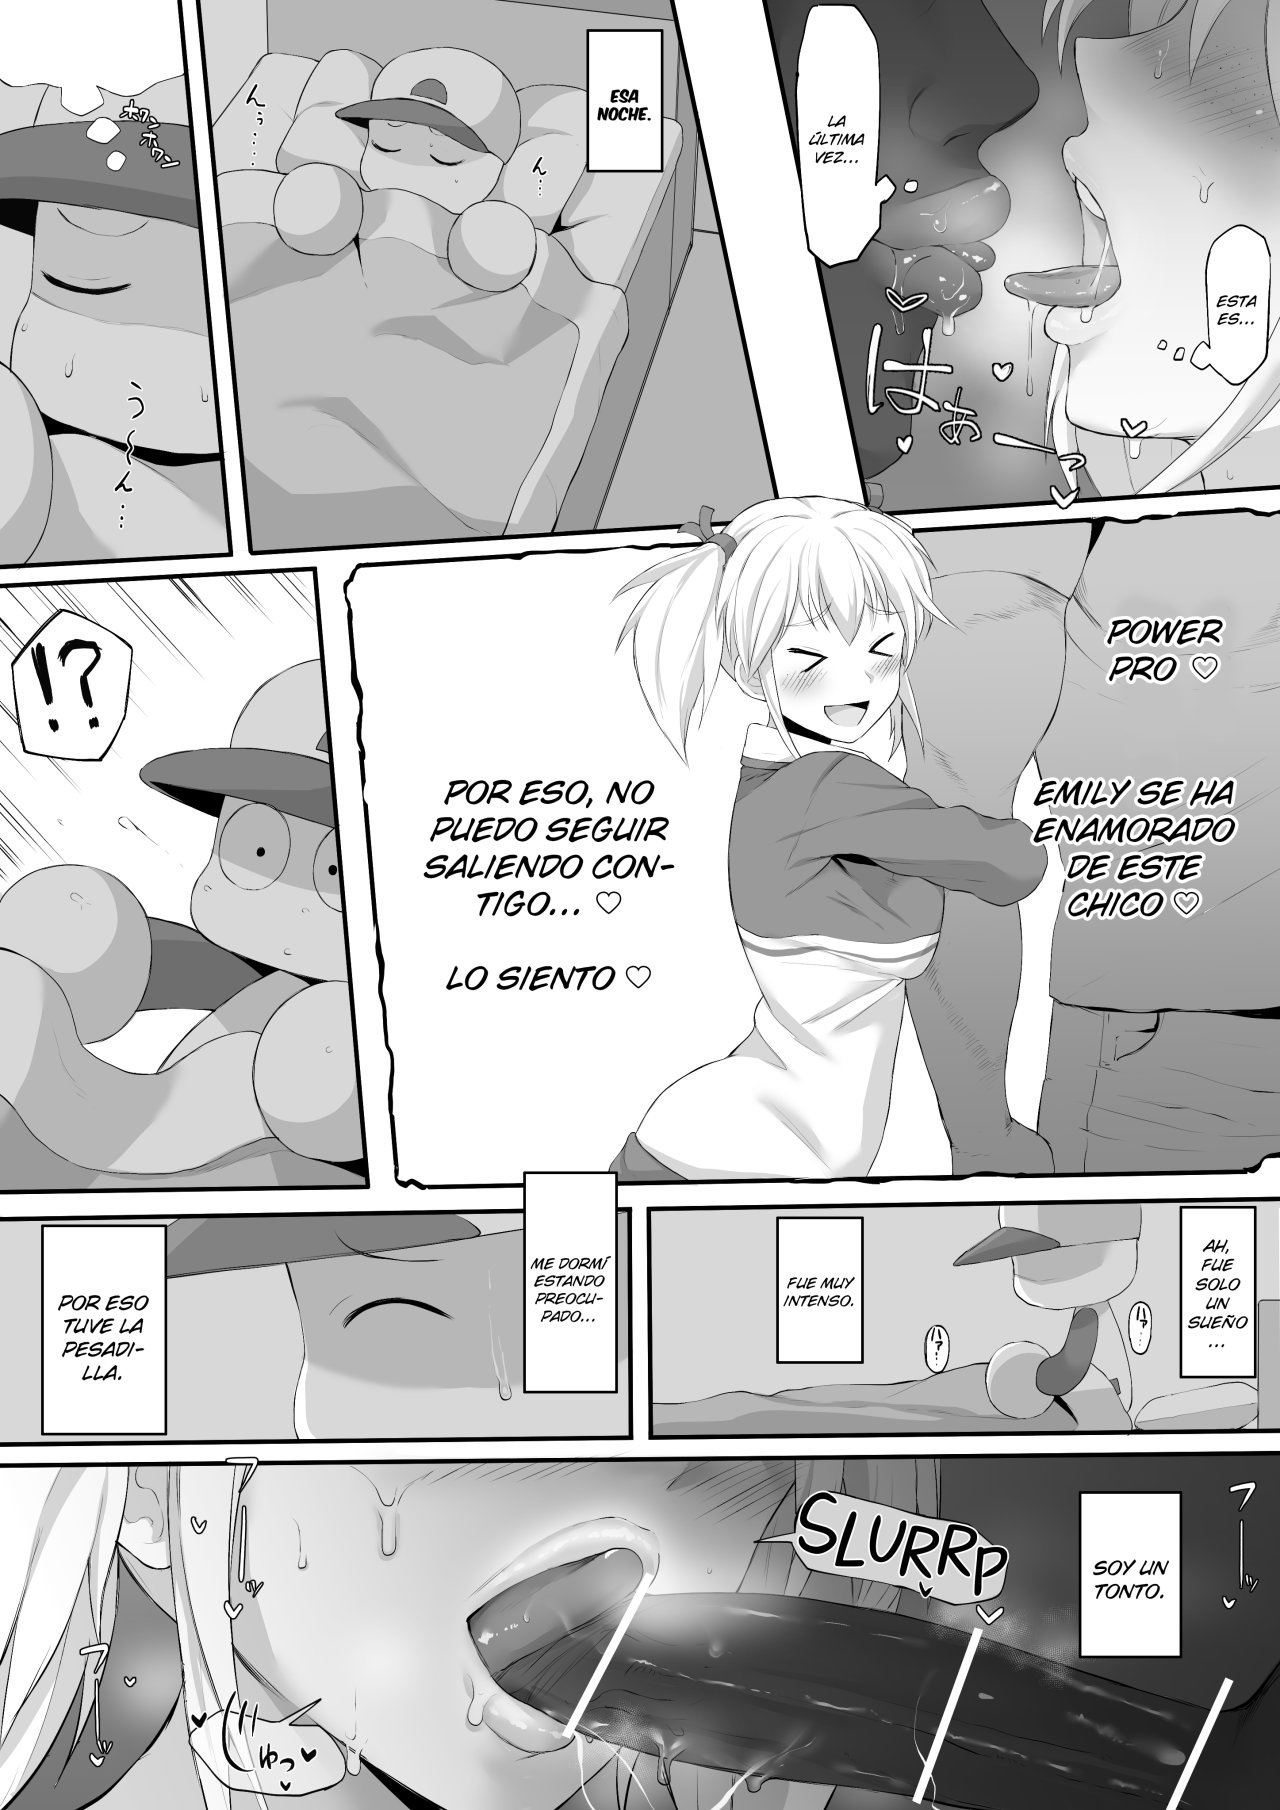 Emily NTR Manga - 2